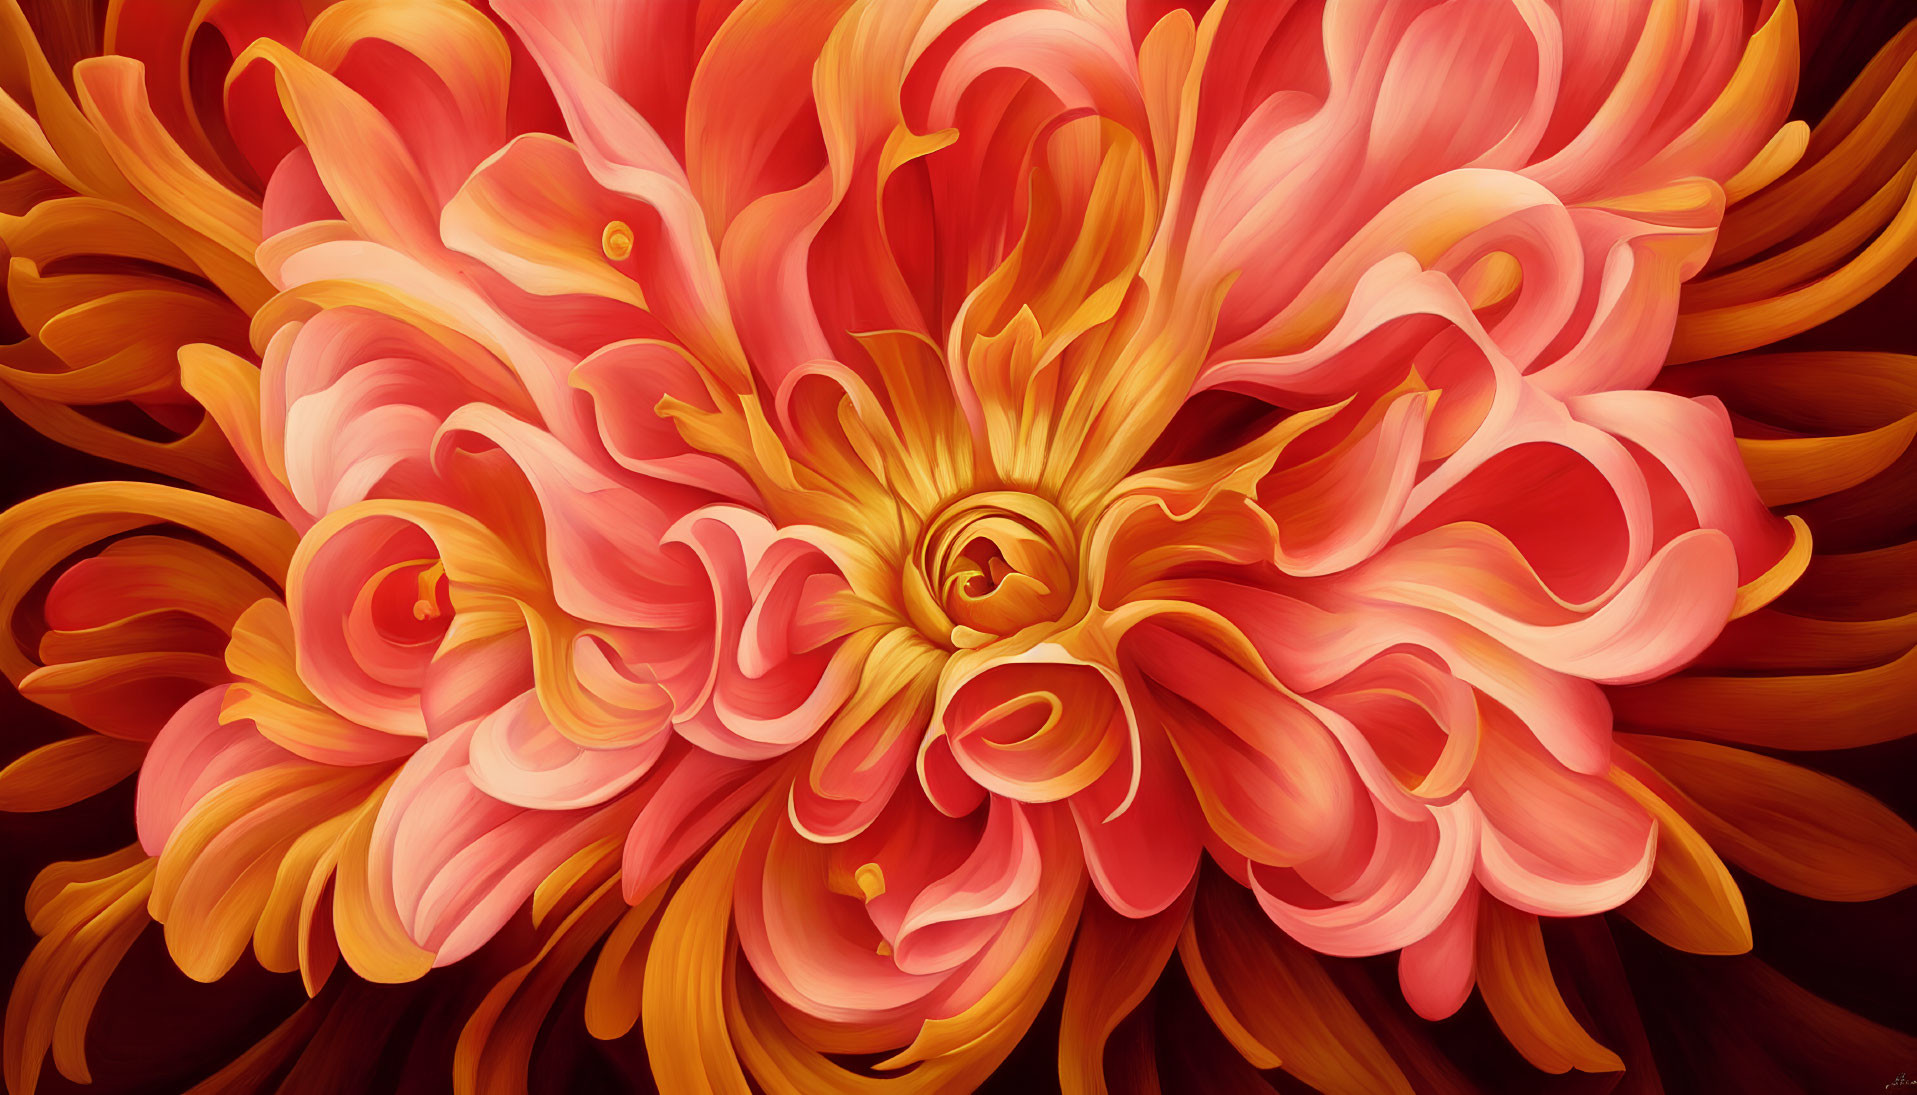 Detailed red and orange flower digital artwork with swirling petals